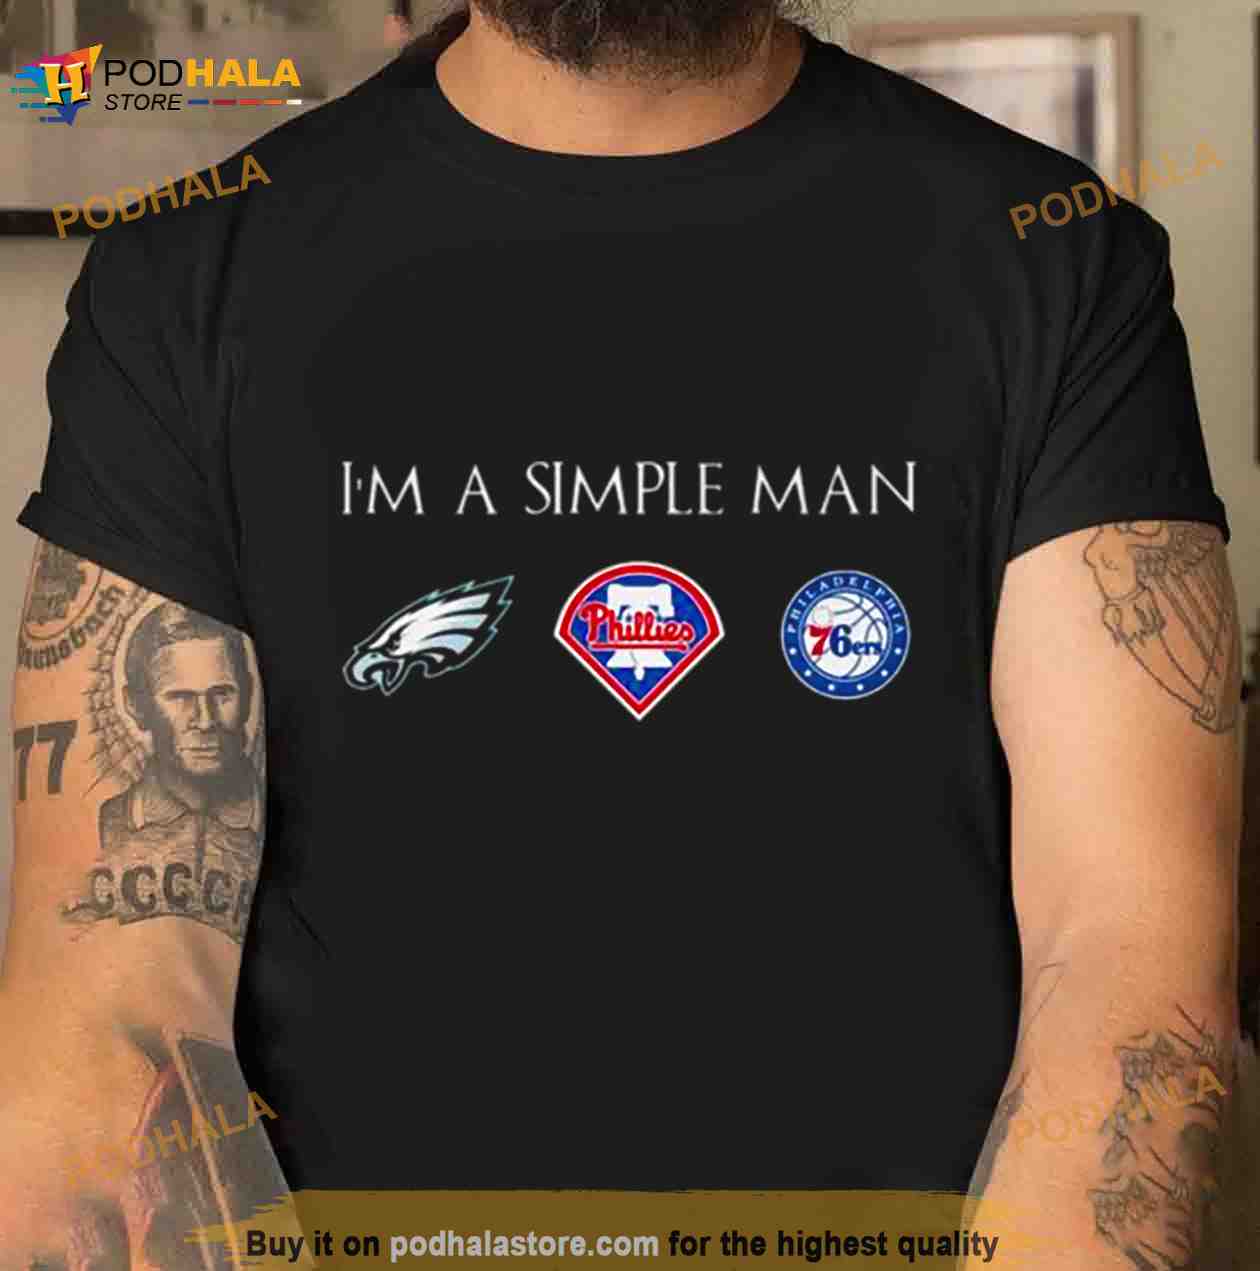 eagles phillies t shirt